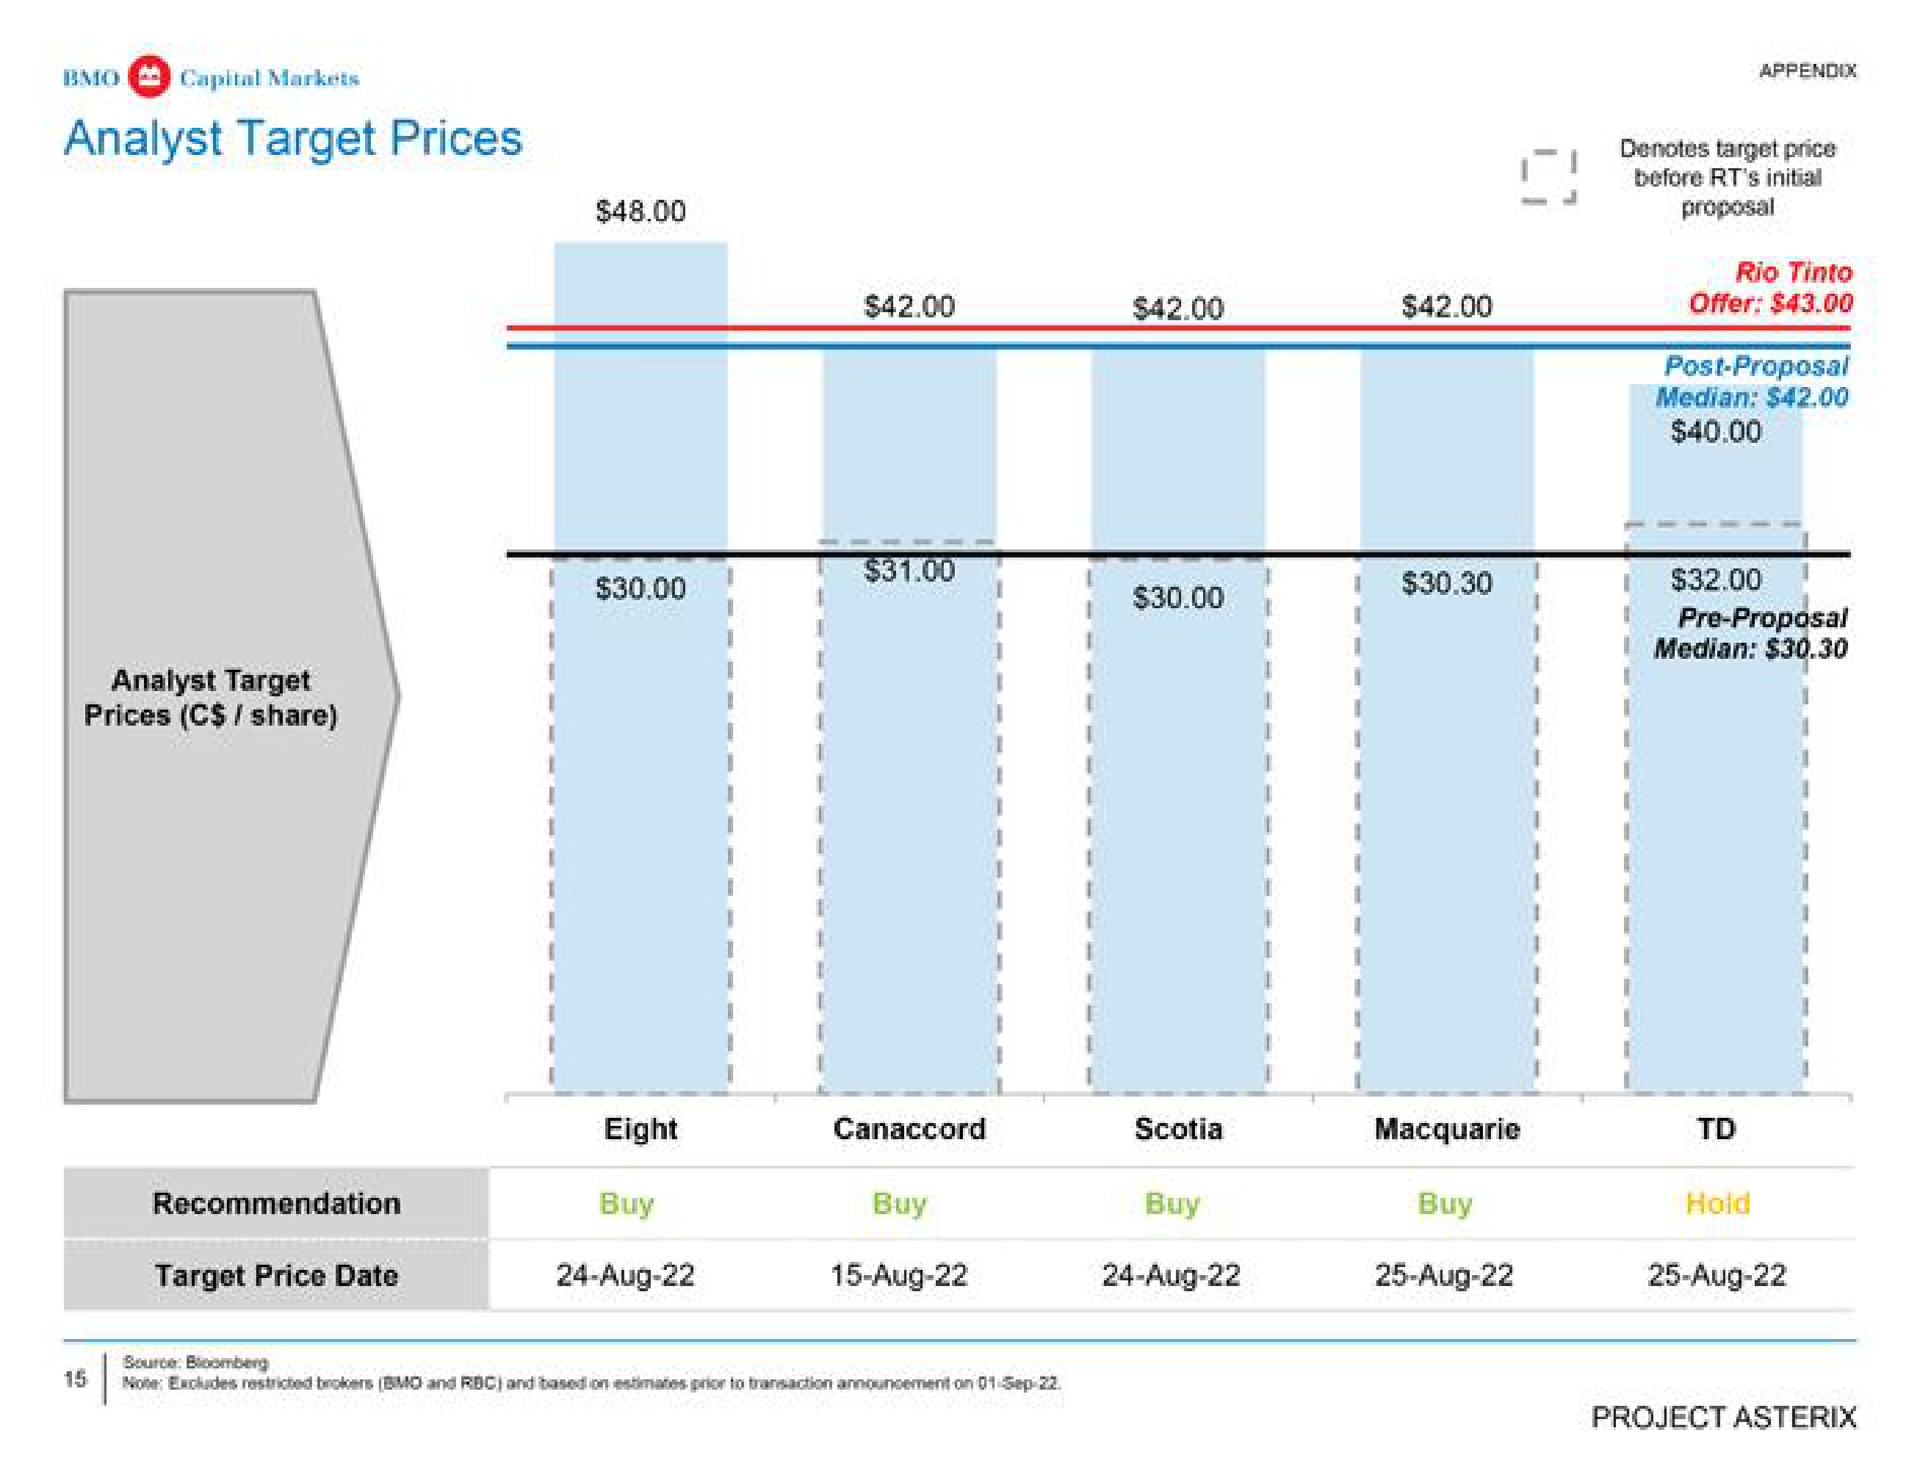 analyst target prices analyst target prices share i denotes target price before initial a i prep median a i | BMO Capital Markets